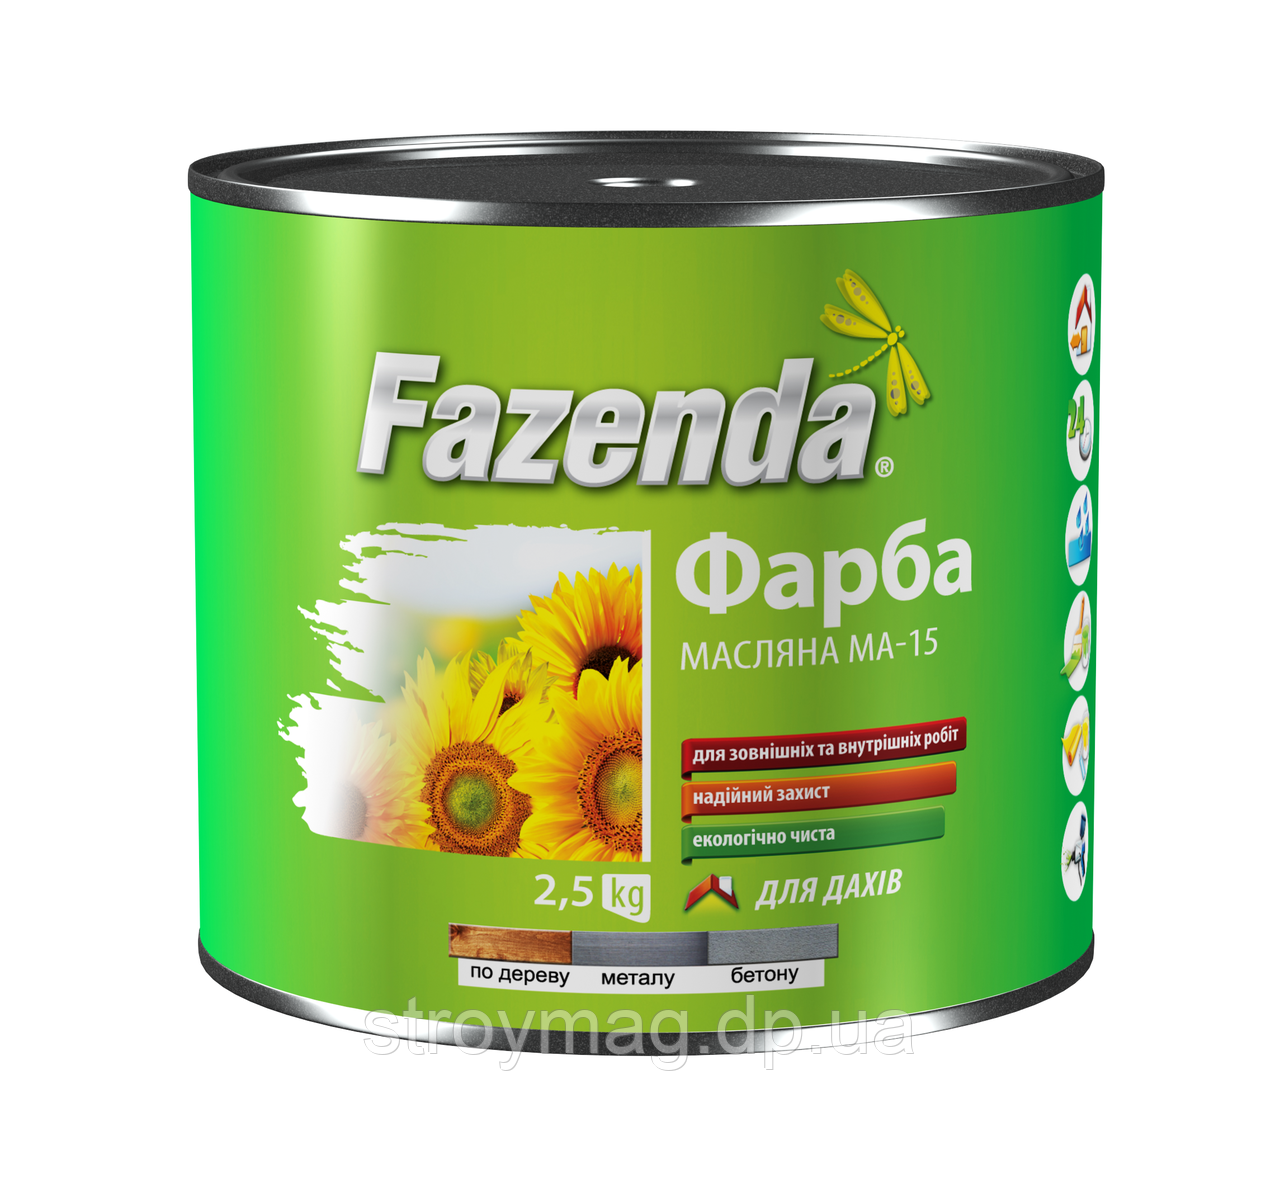 Фарба олійна Fazenda МА-15 2,5 кг (жовта)